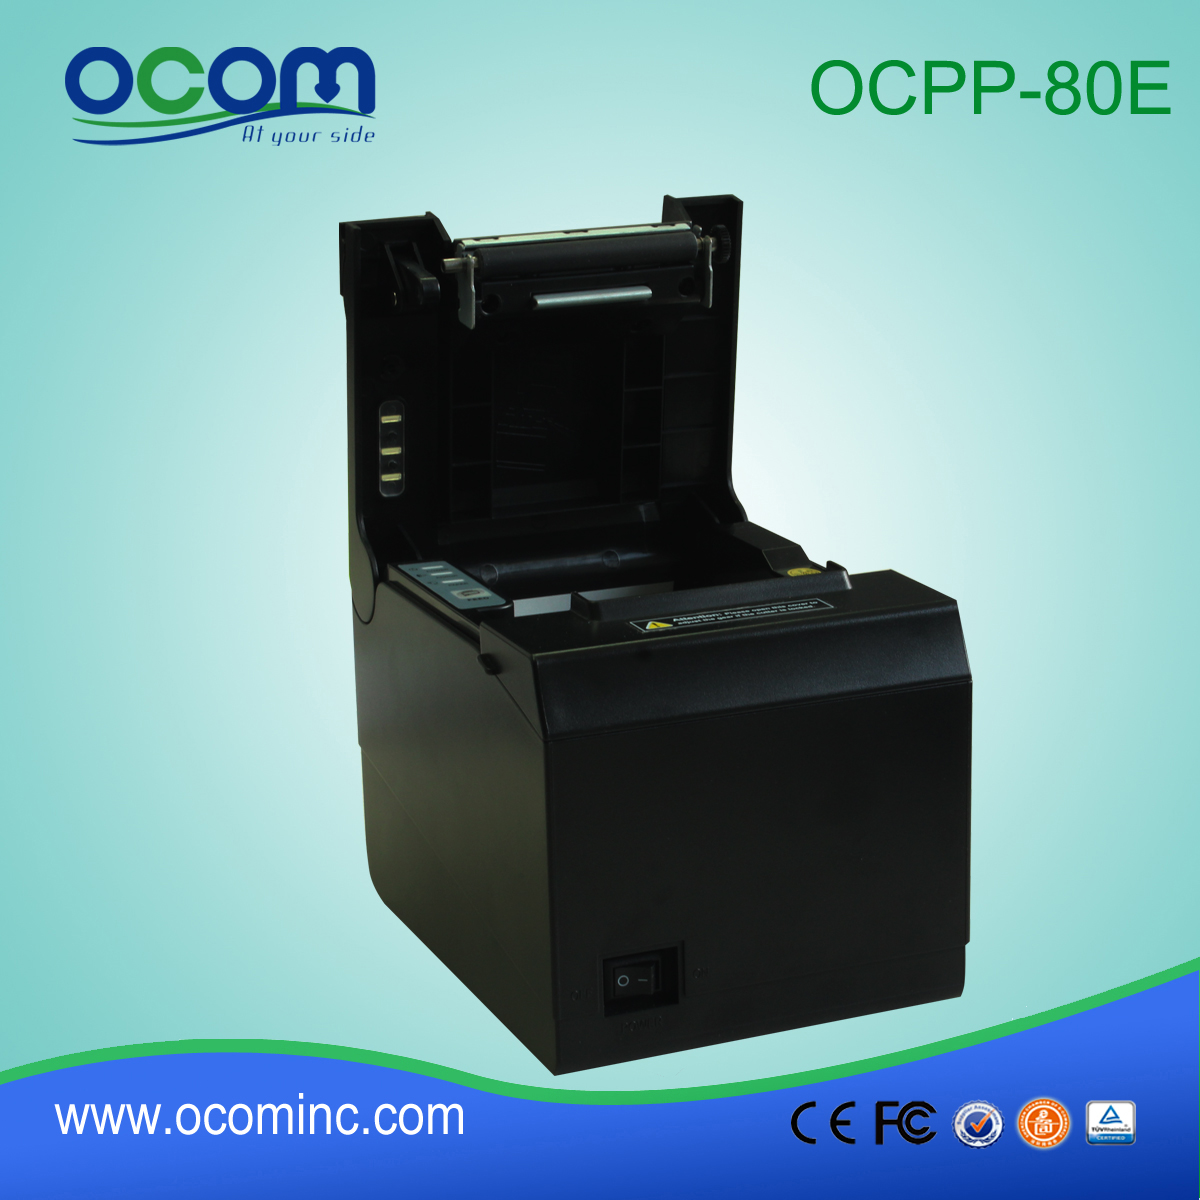 OCPP-80E USB / paralelo 80mm impresora de recibos barato cortador automático pos térmica